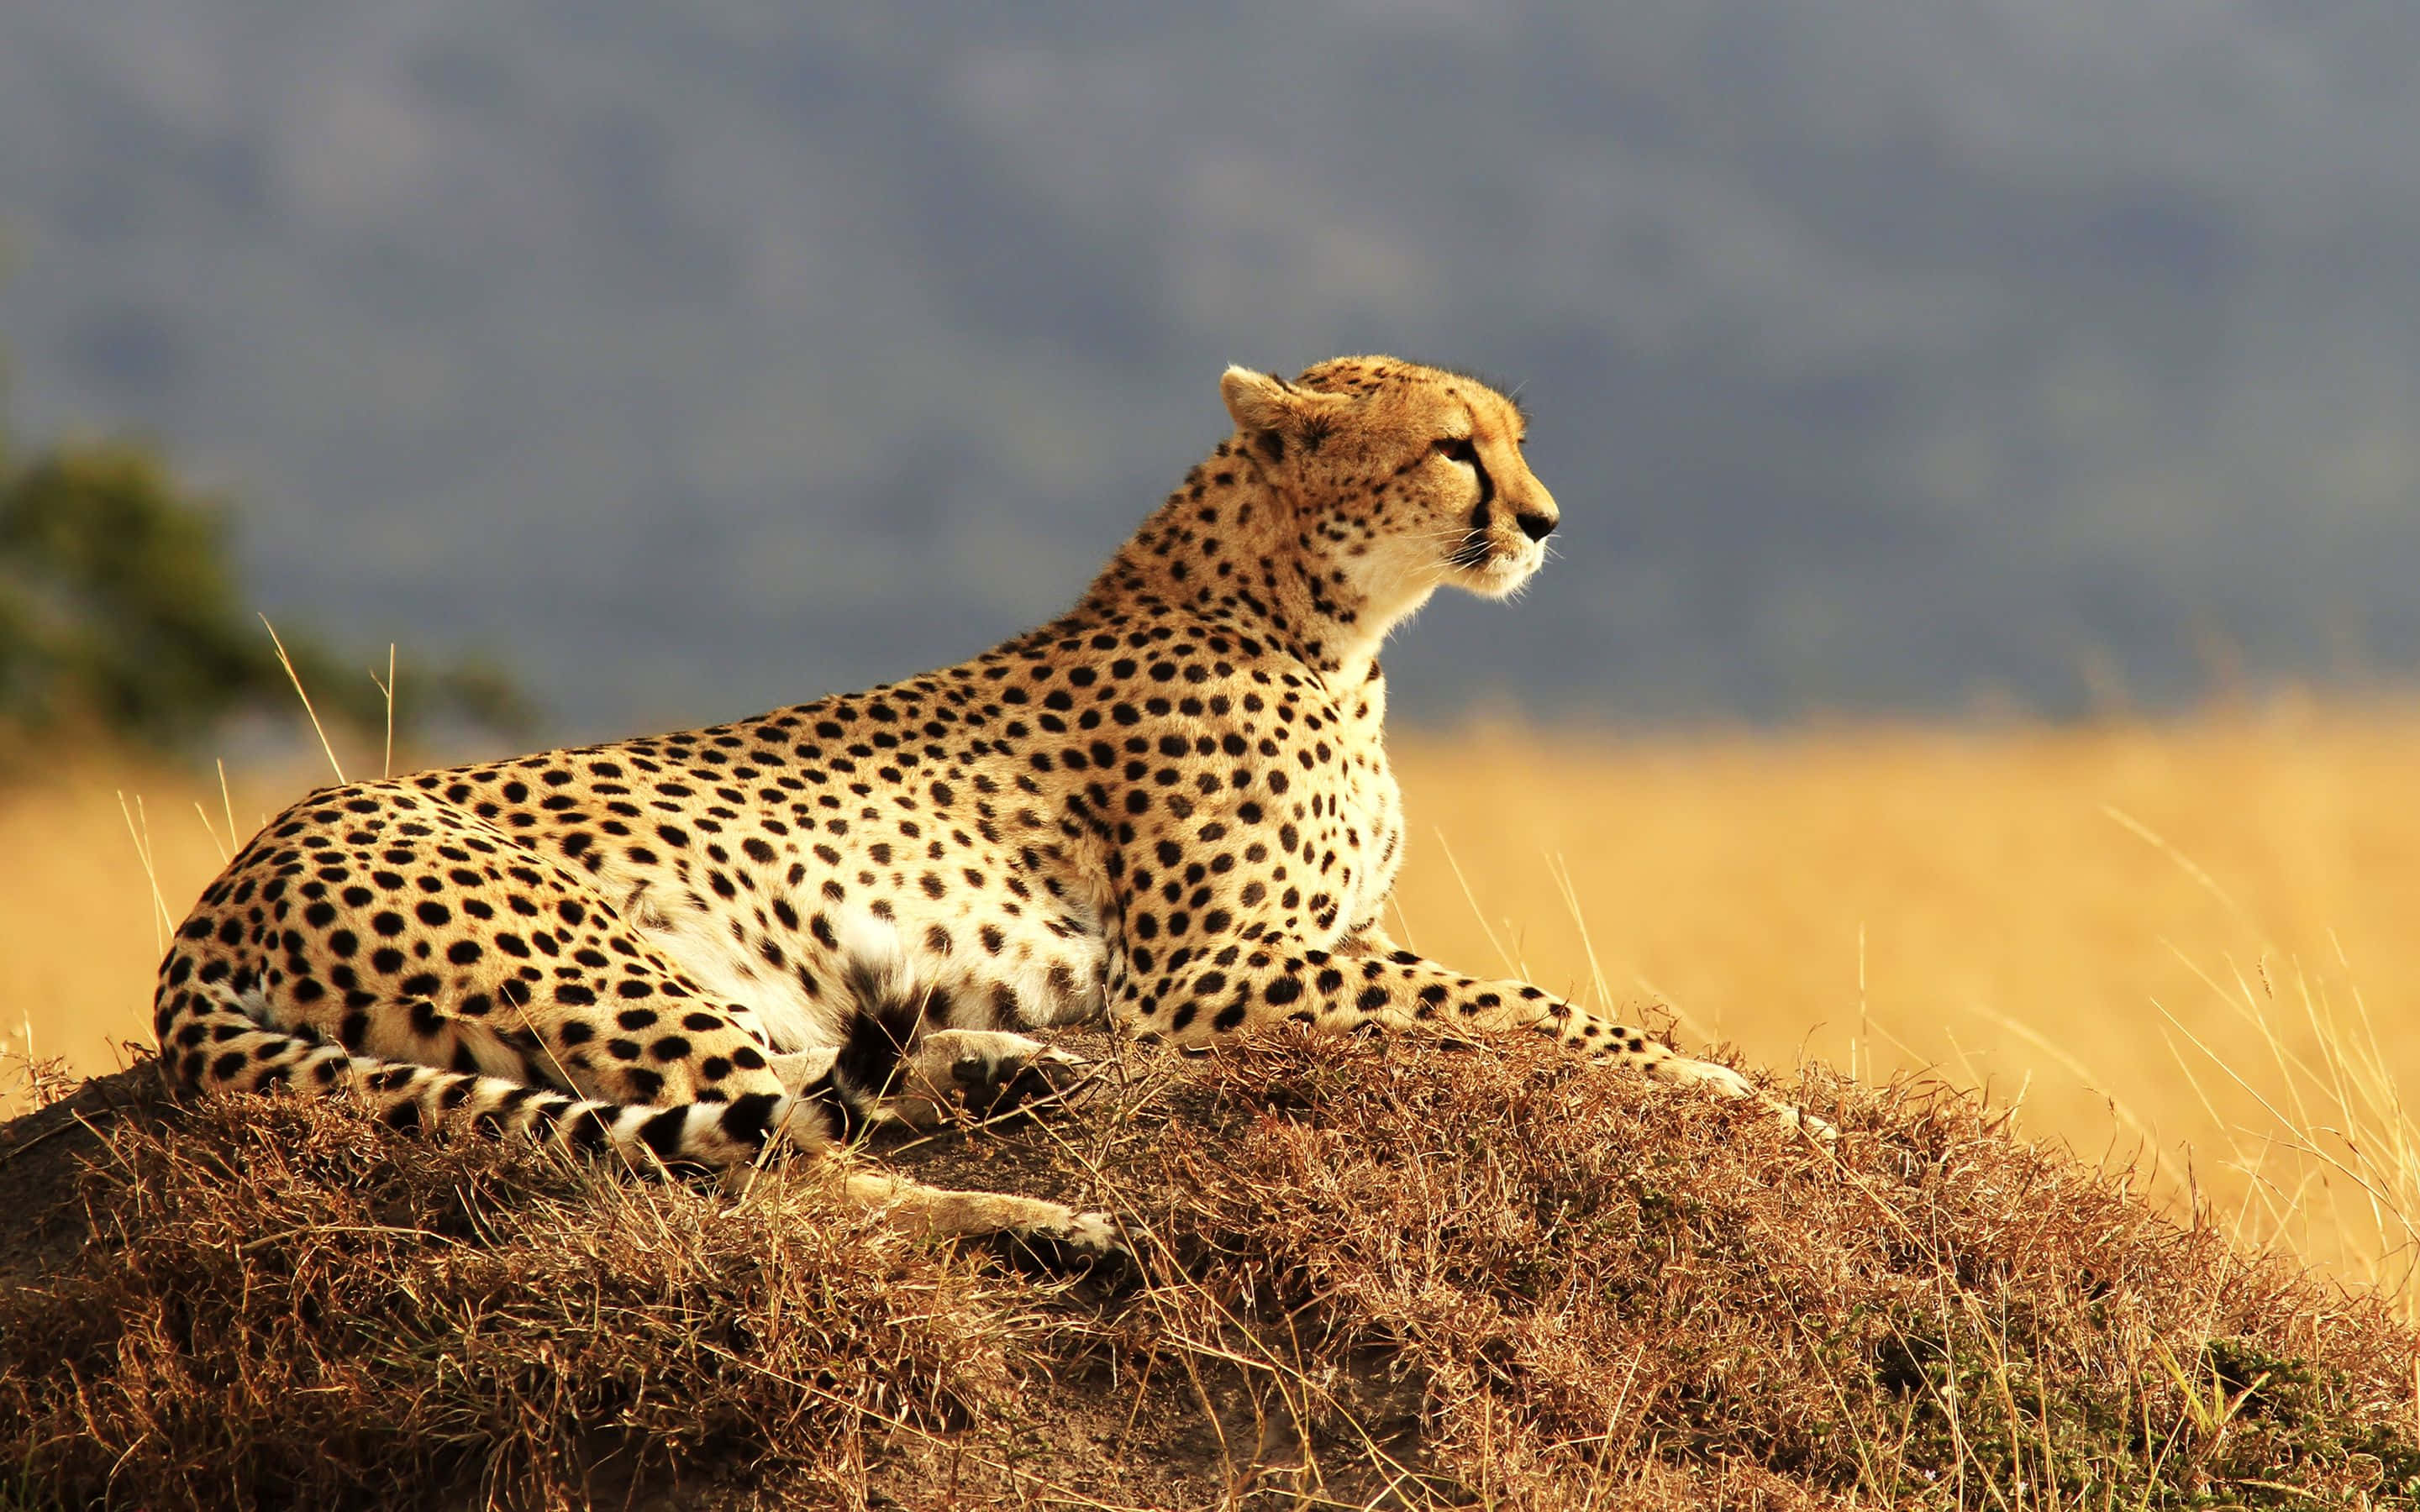 Spotting This Cheetah in Its Natural Habitat